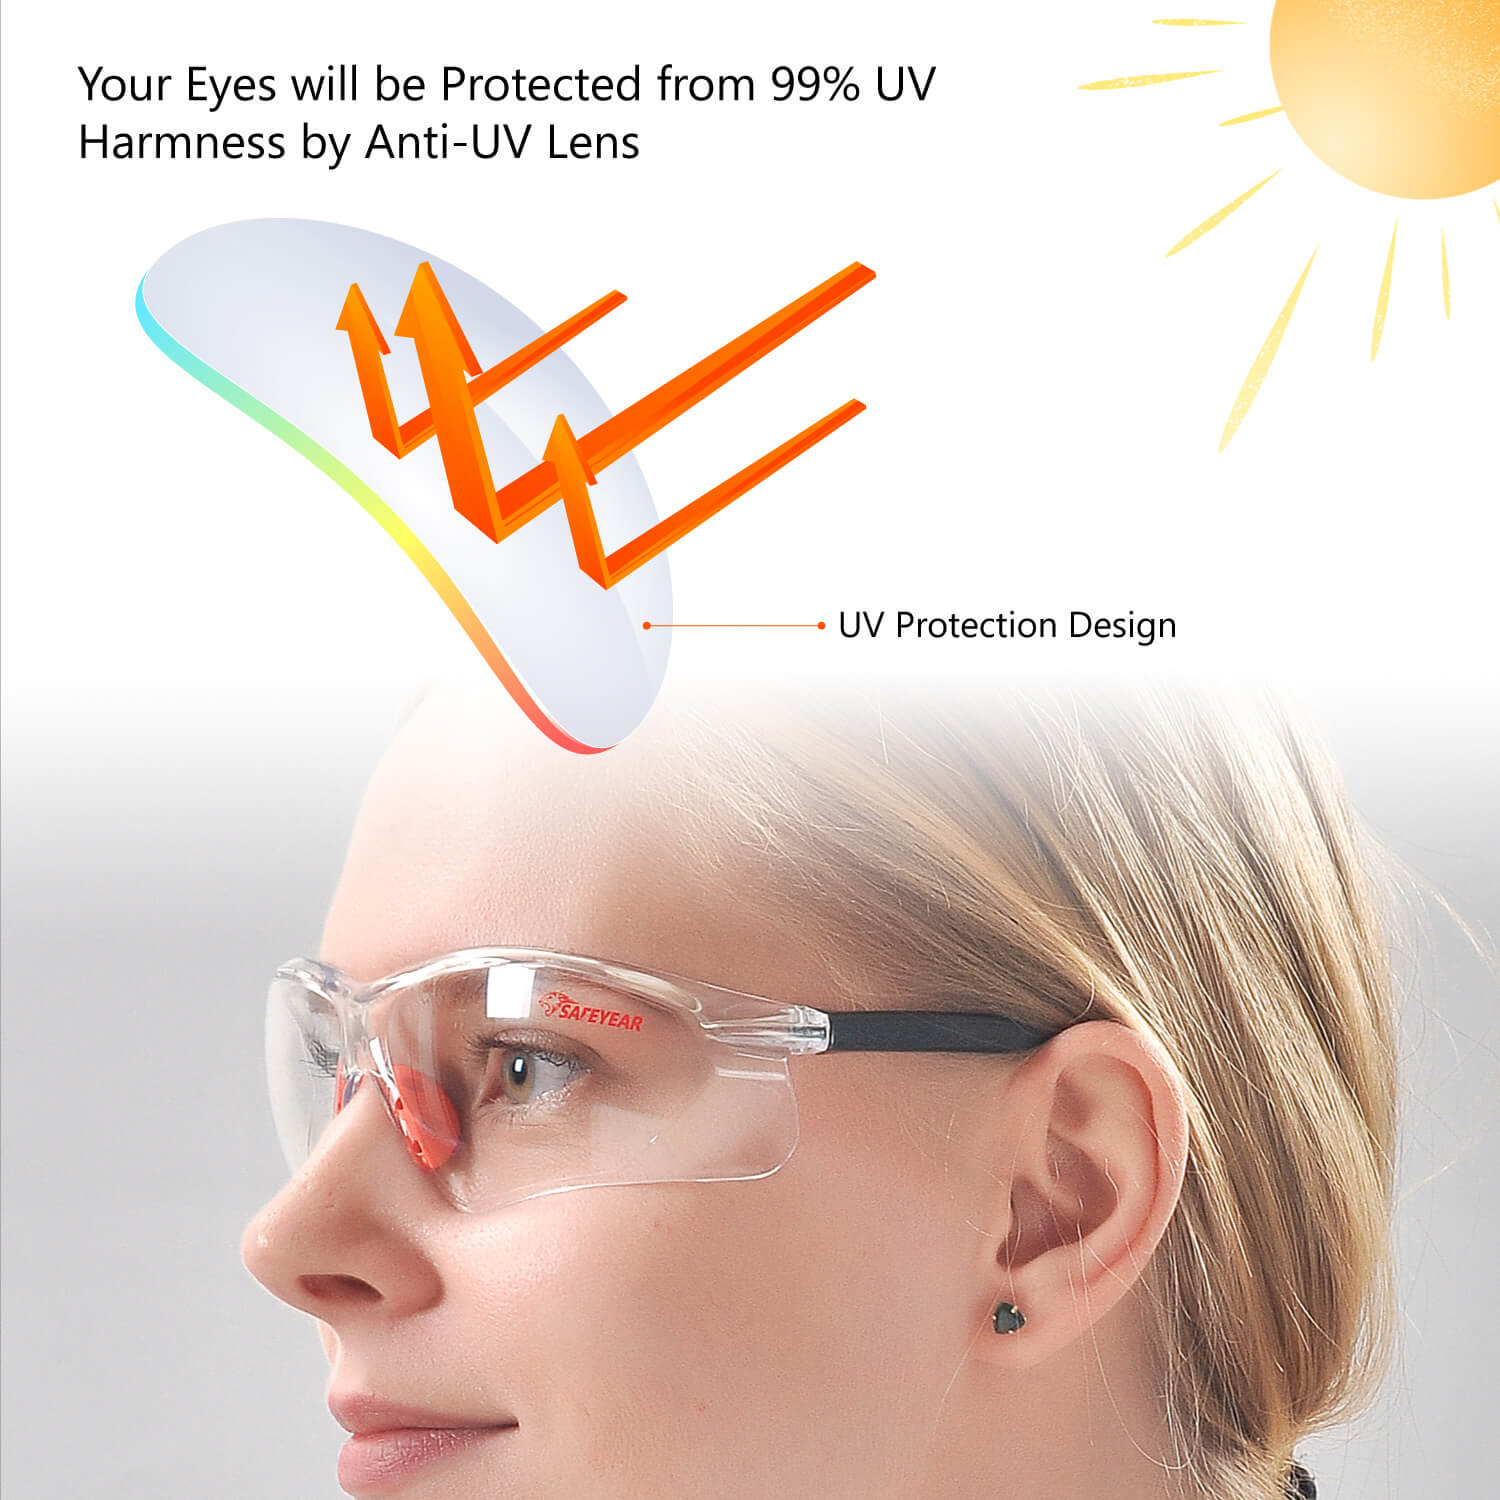 Safeyear Scratch Resistant Anti Fog Z87 Safety Glasses for Men & Women Protective Eyewear Lab Work Glasses